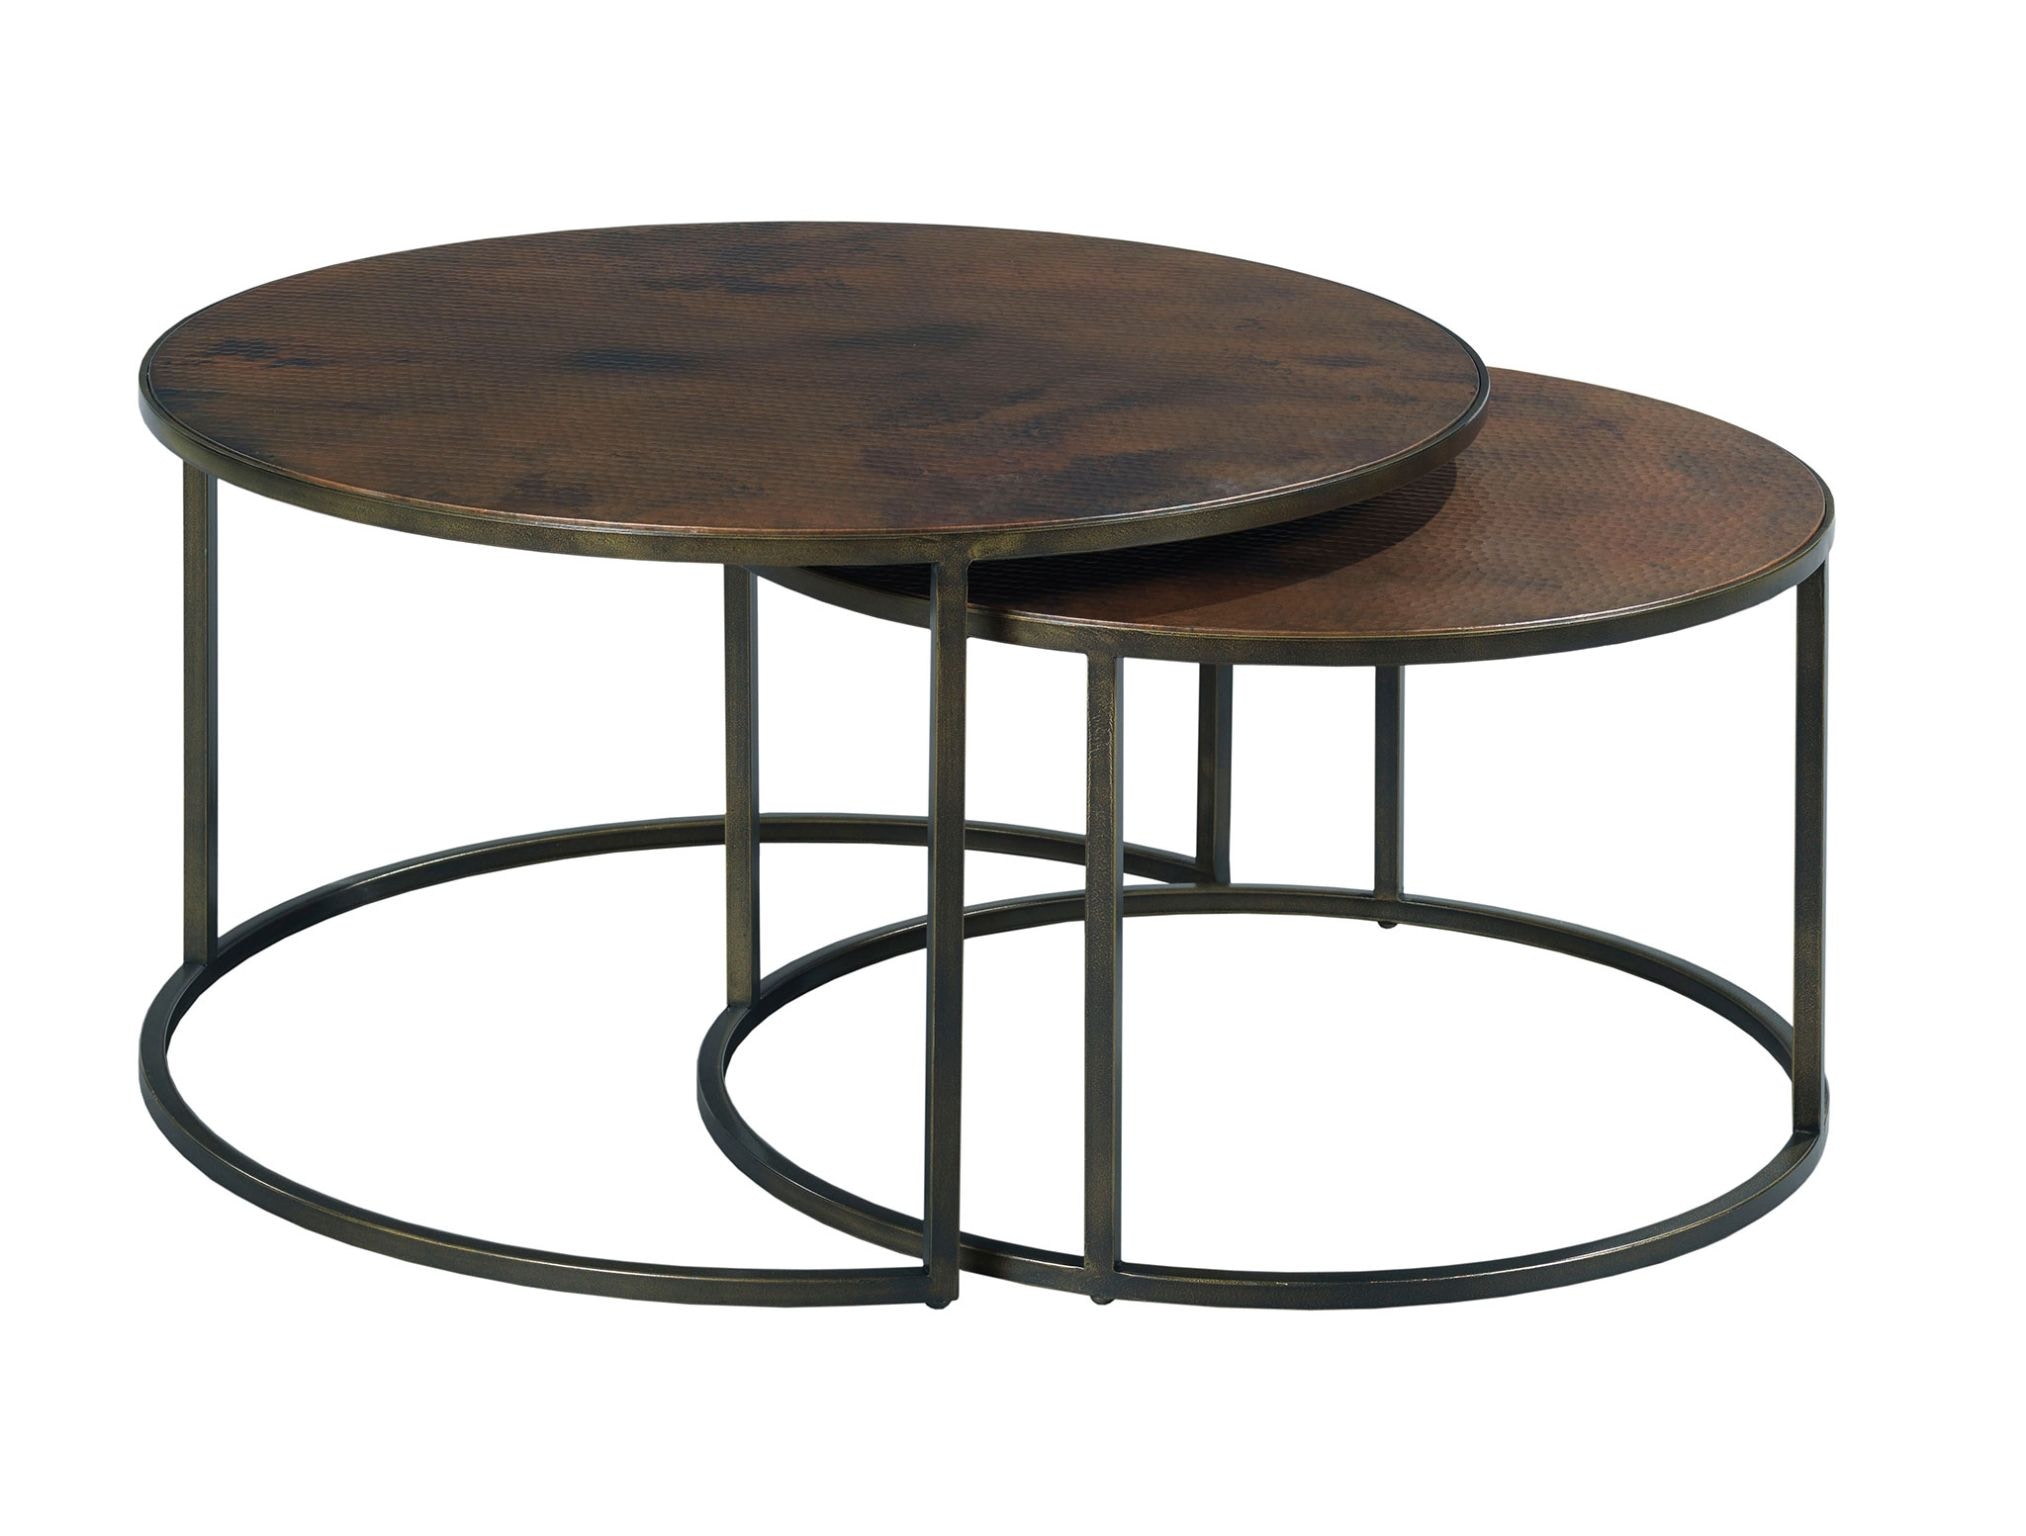 Столик металлический каркас. Кофейный столик Orion small Coffee Table alr1573. Круглый стол AMCLASSIC aim Dining Table. Журнальный столик Round Nesting Coffee Table. Столик круглый.